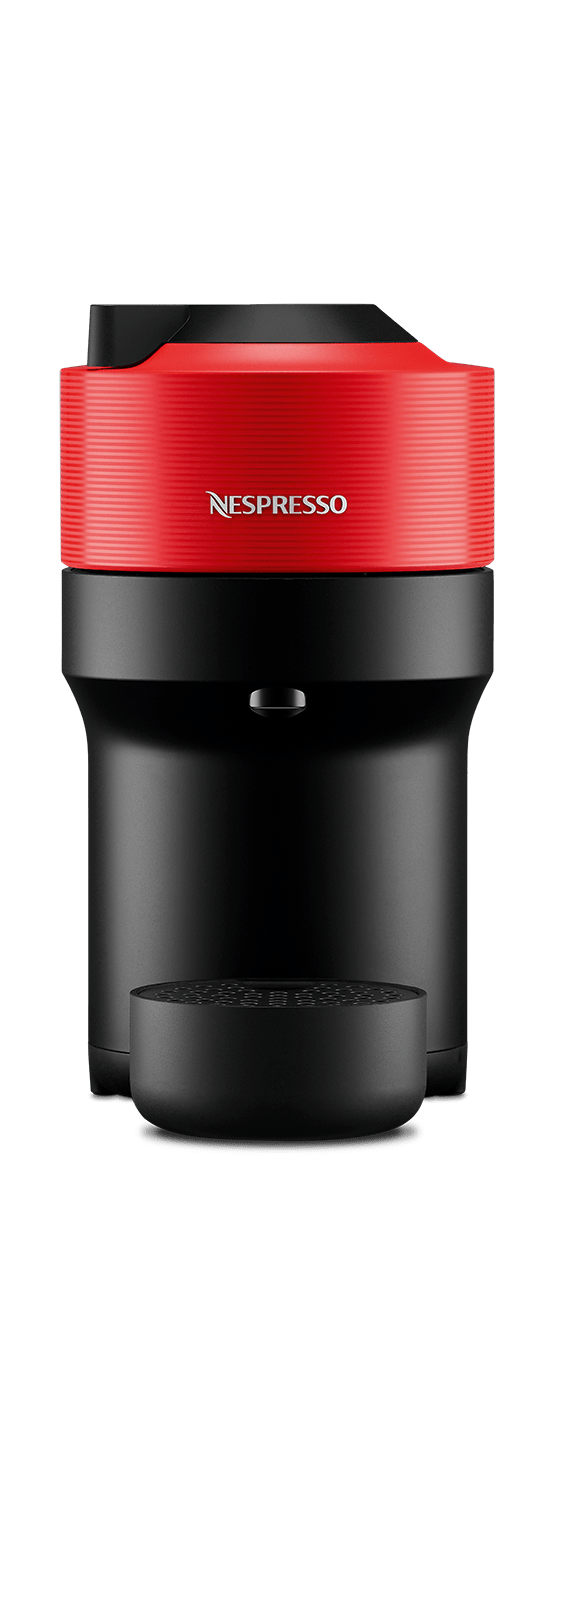 NESPRESSO Vertuo Pop Red Coffee Machine